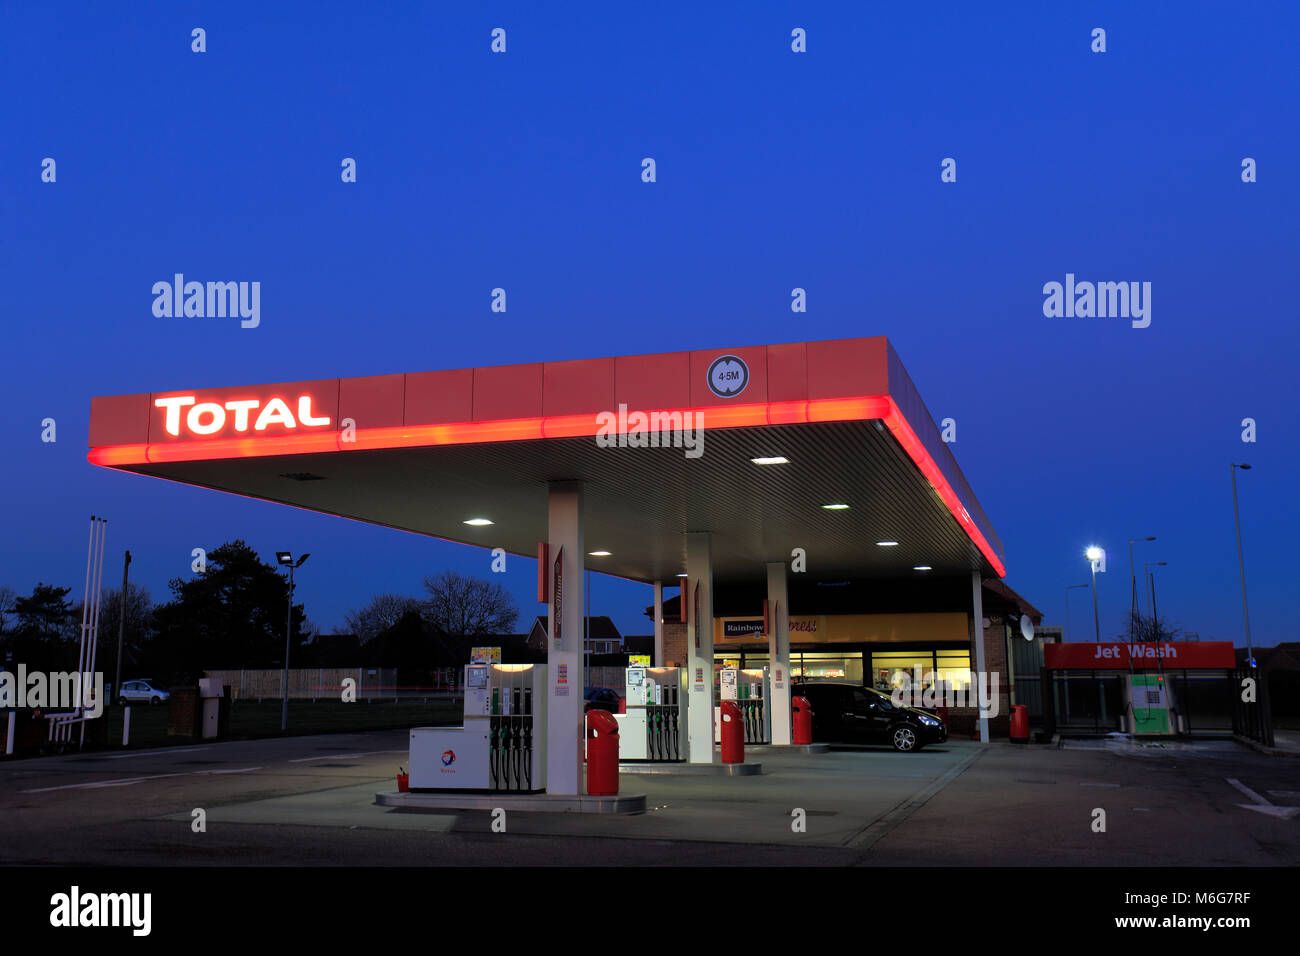 Station essence Total la nuit, Great Yarmouth, Norfolk, England, UK Banque D'Images